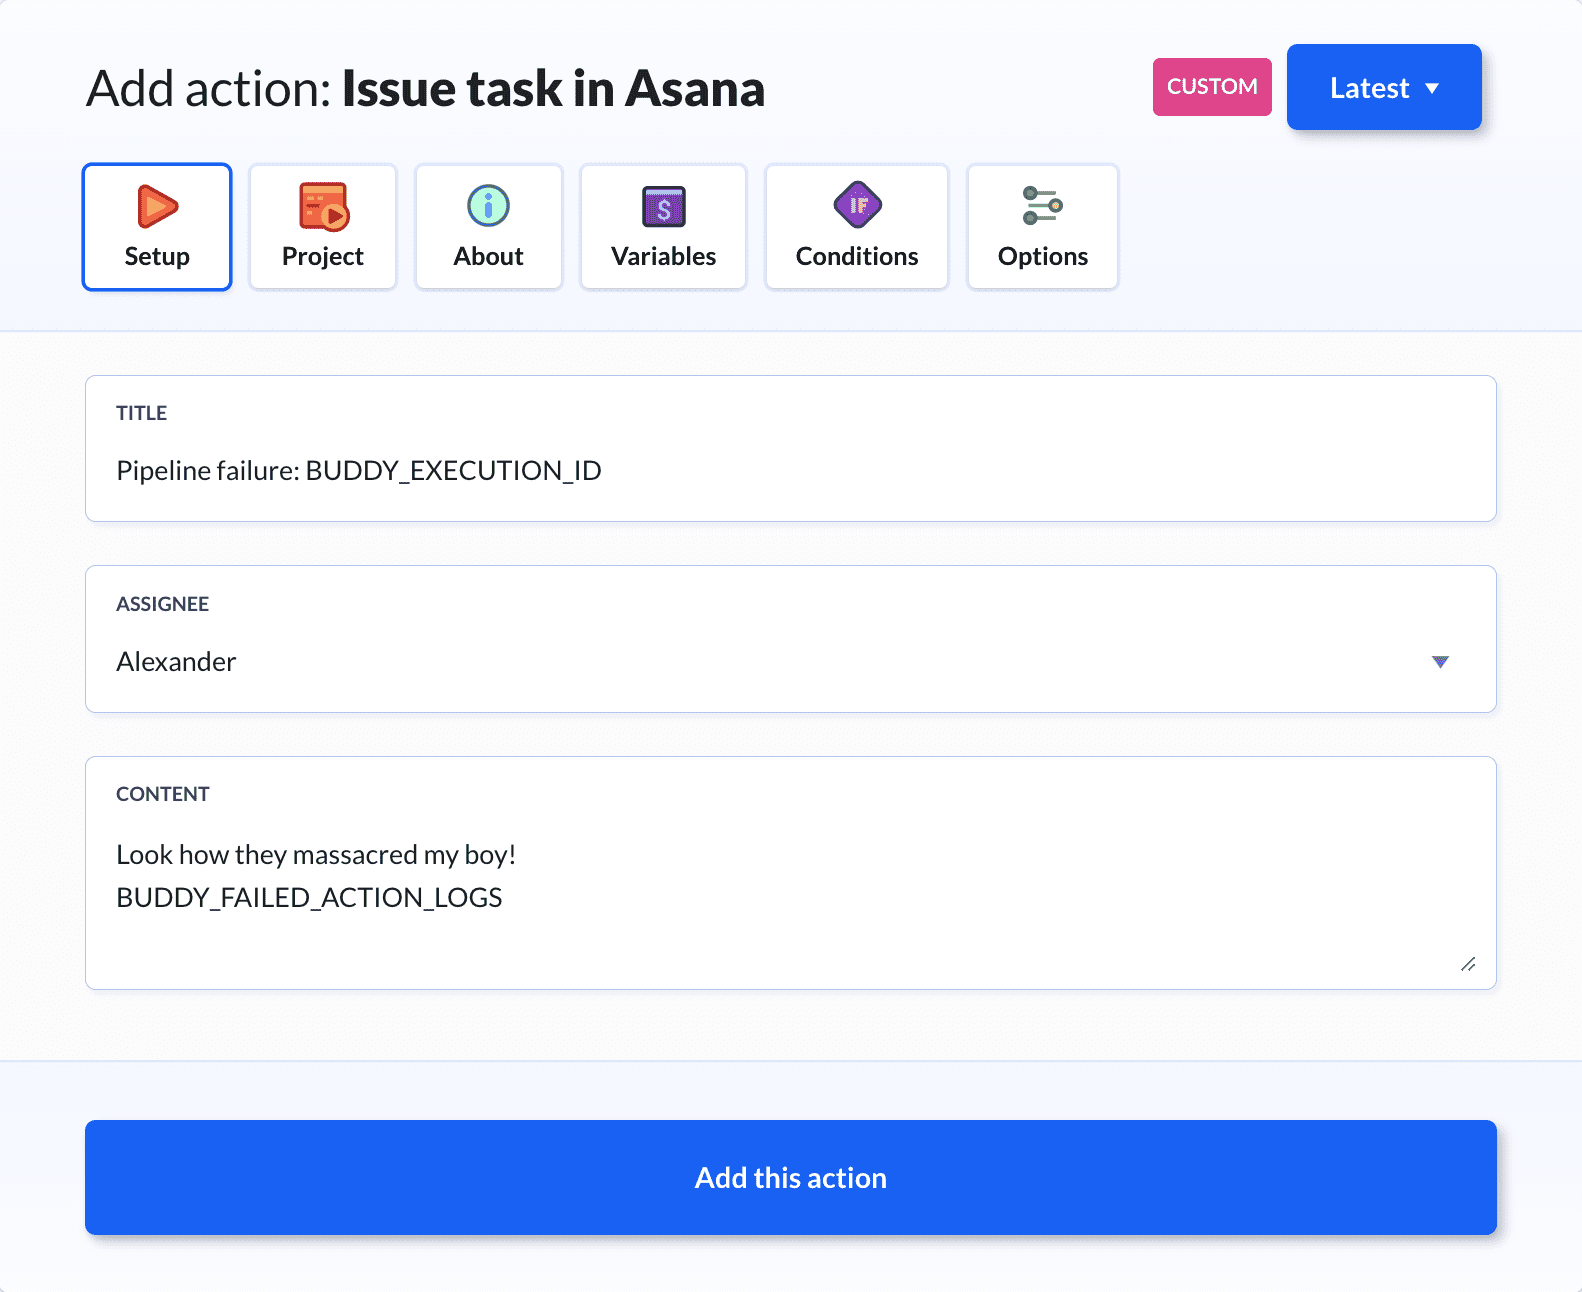 A custom action issuing tasks in Asana